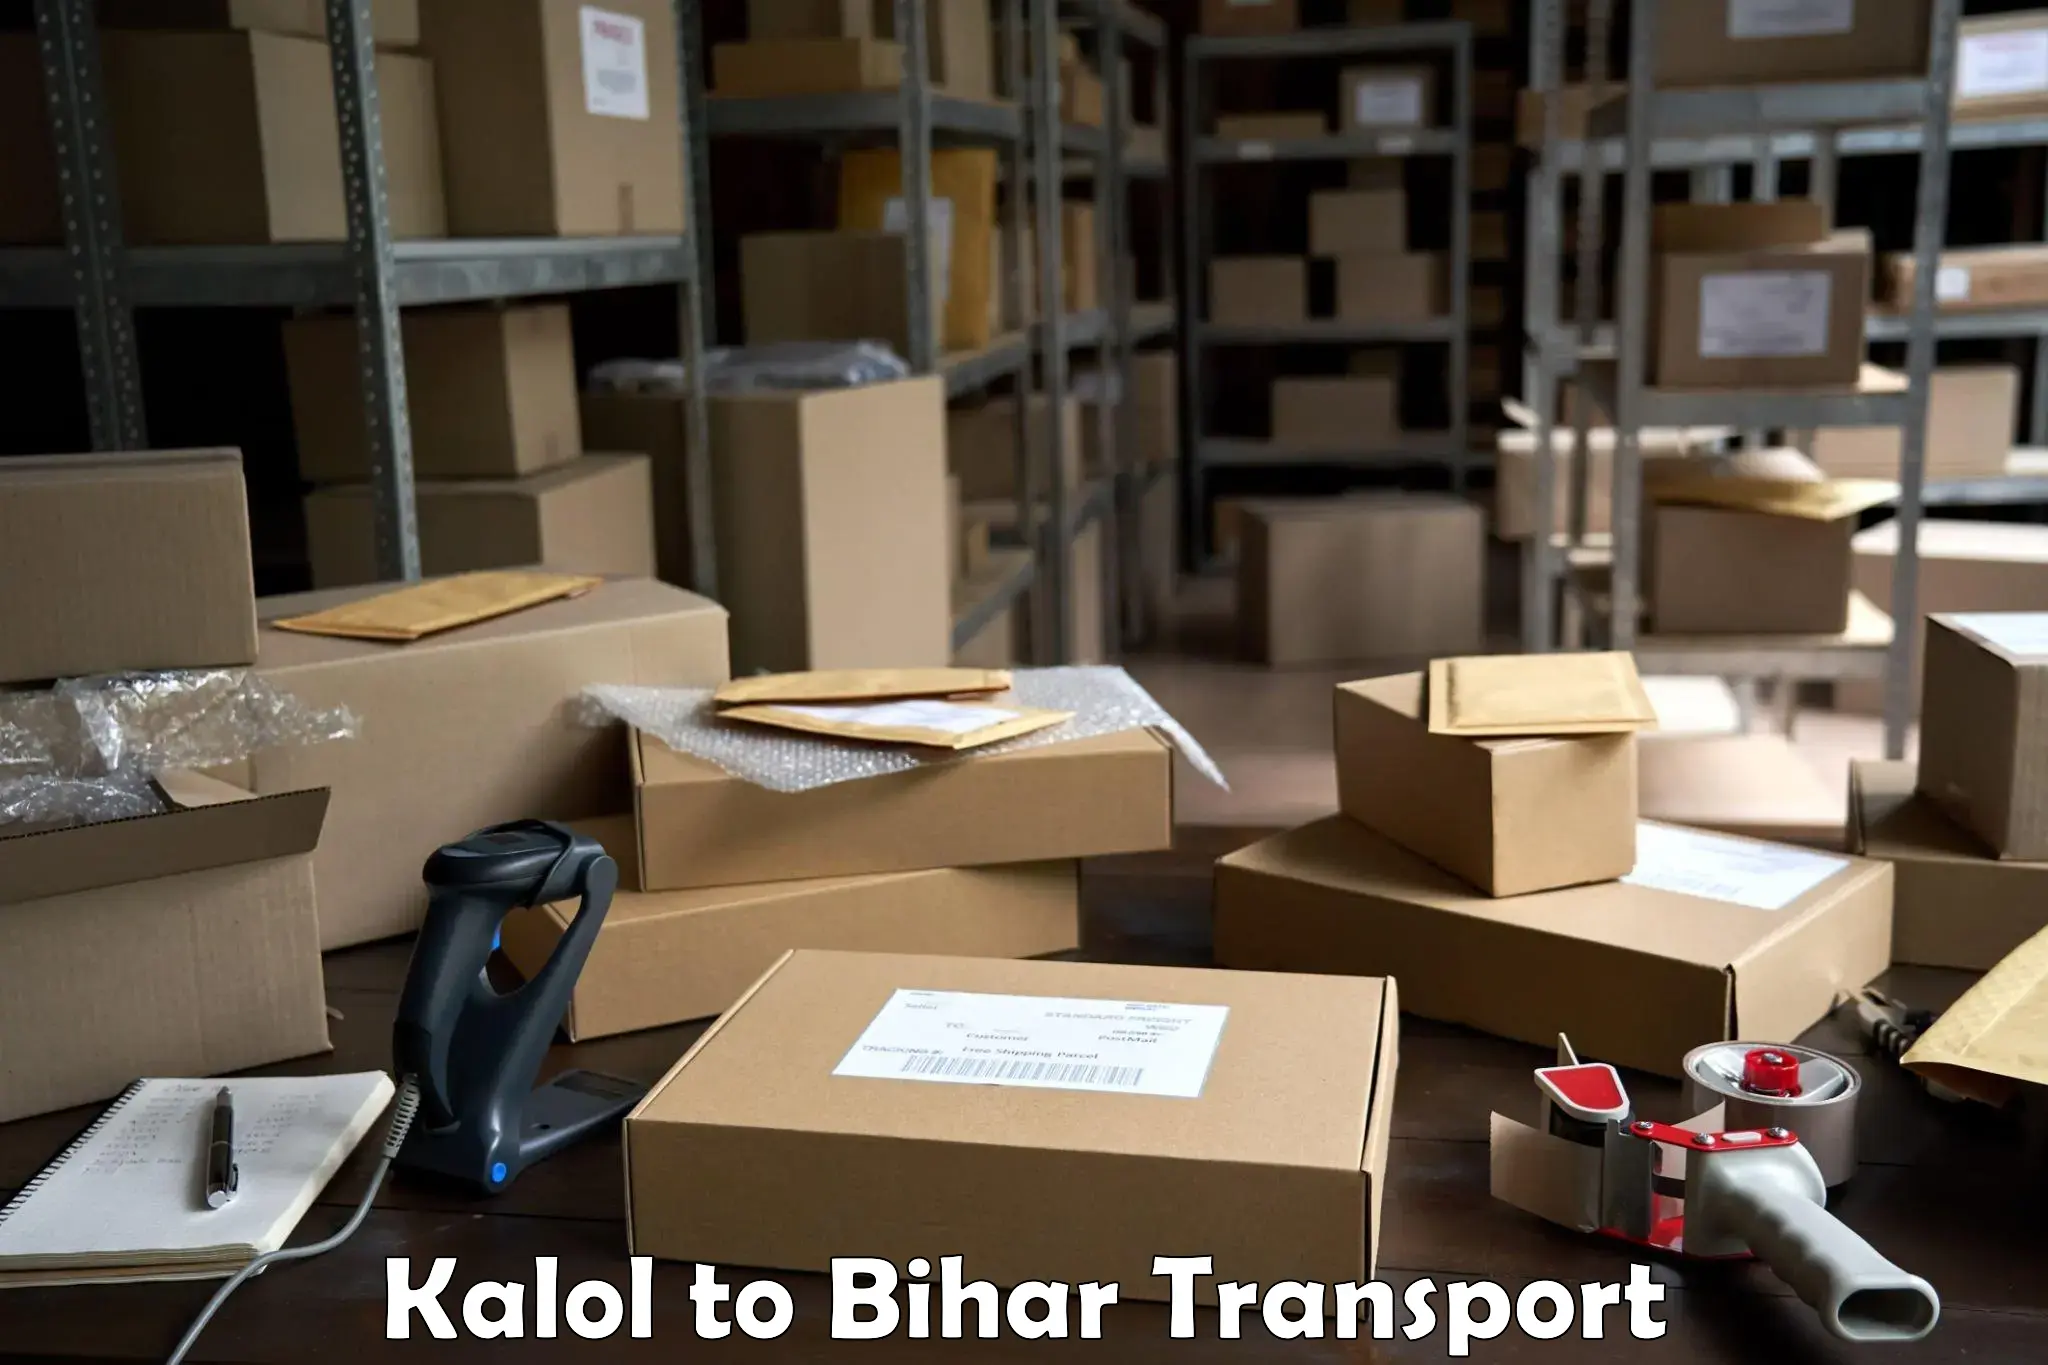 Shipping partner Kalol to Piro